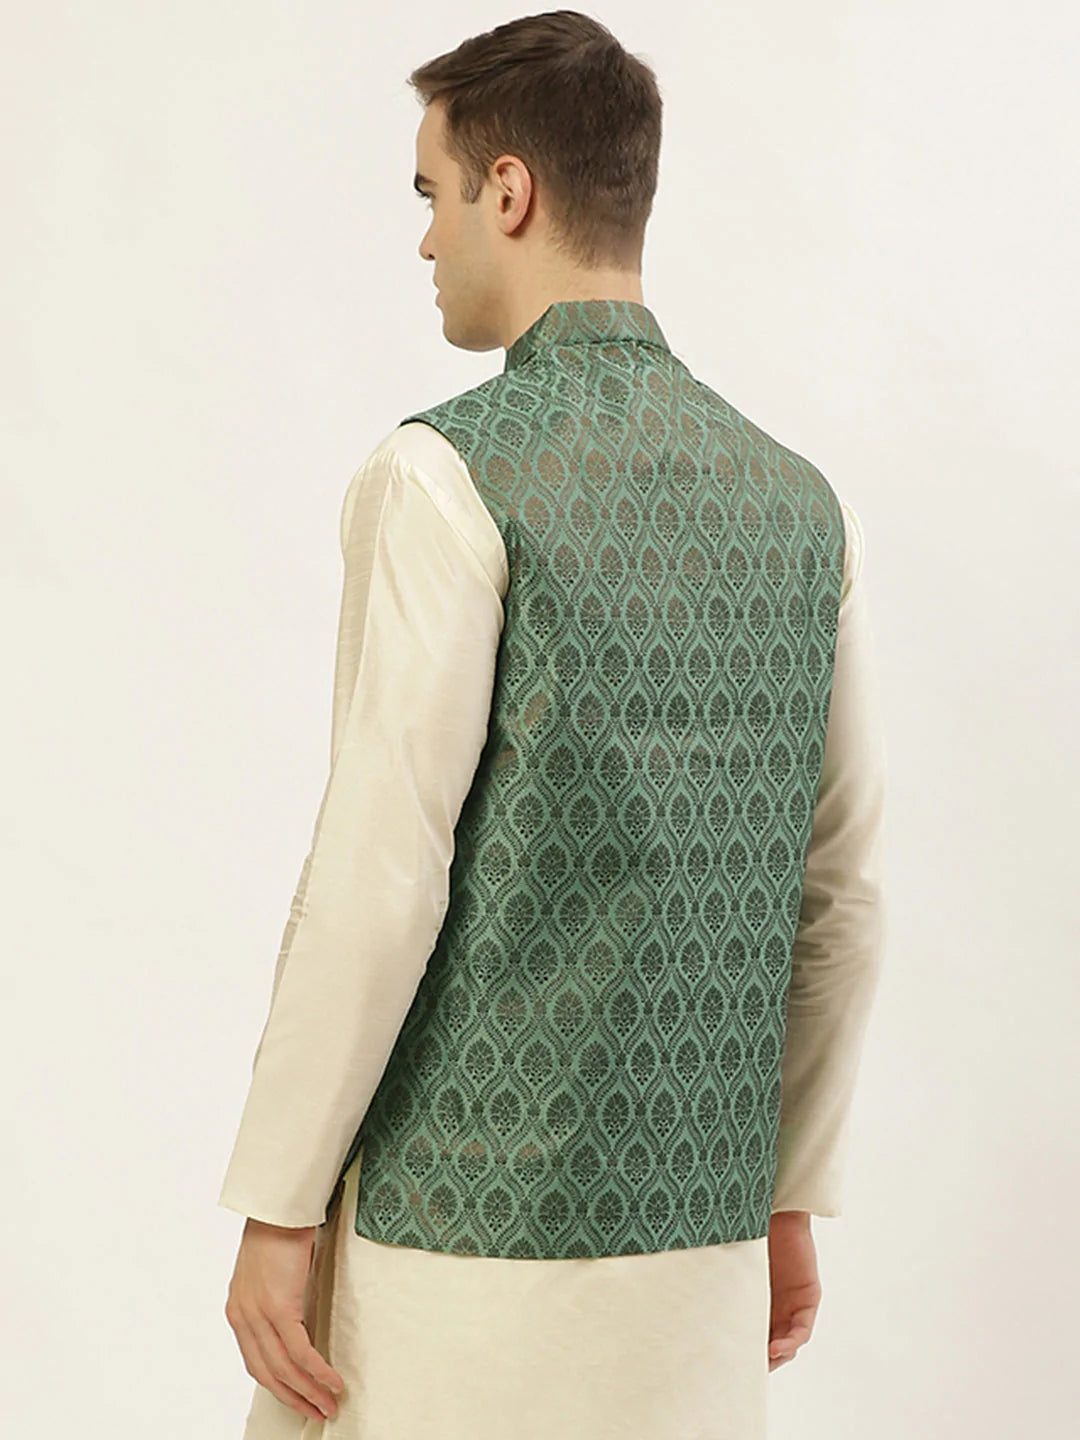 Jompers Men's Green Self-Designed Waistcoat ( JOWC 4028Green )